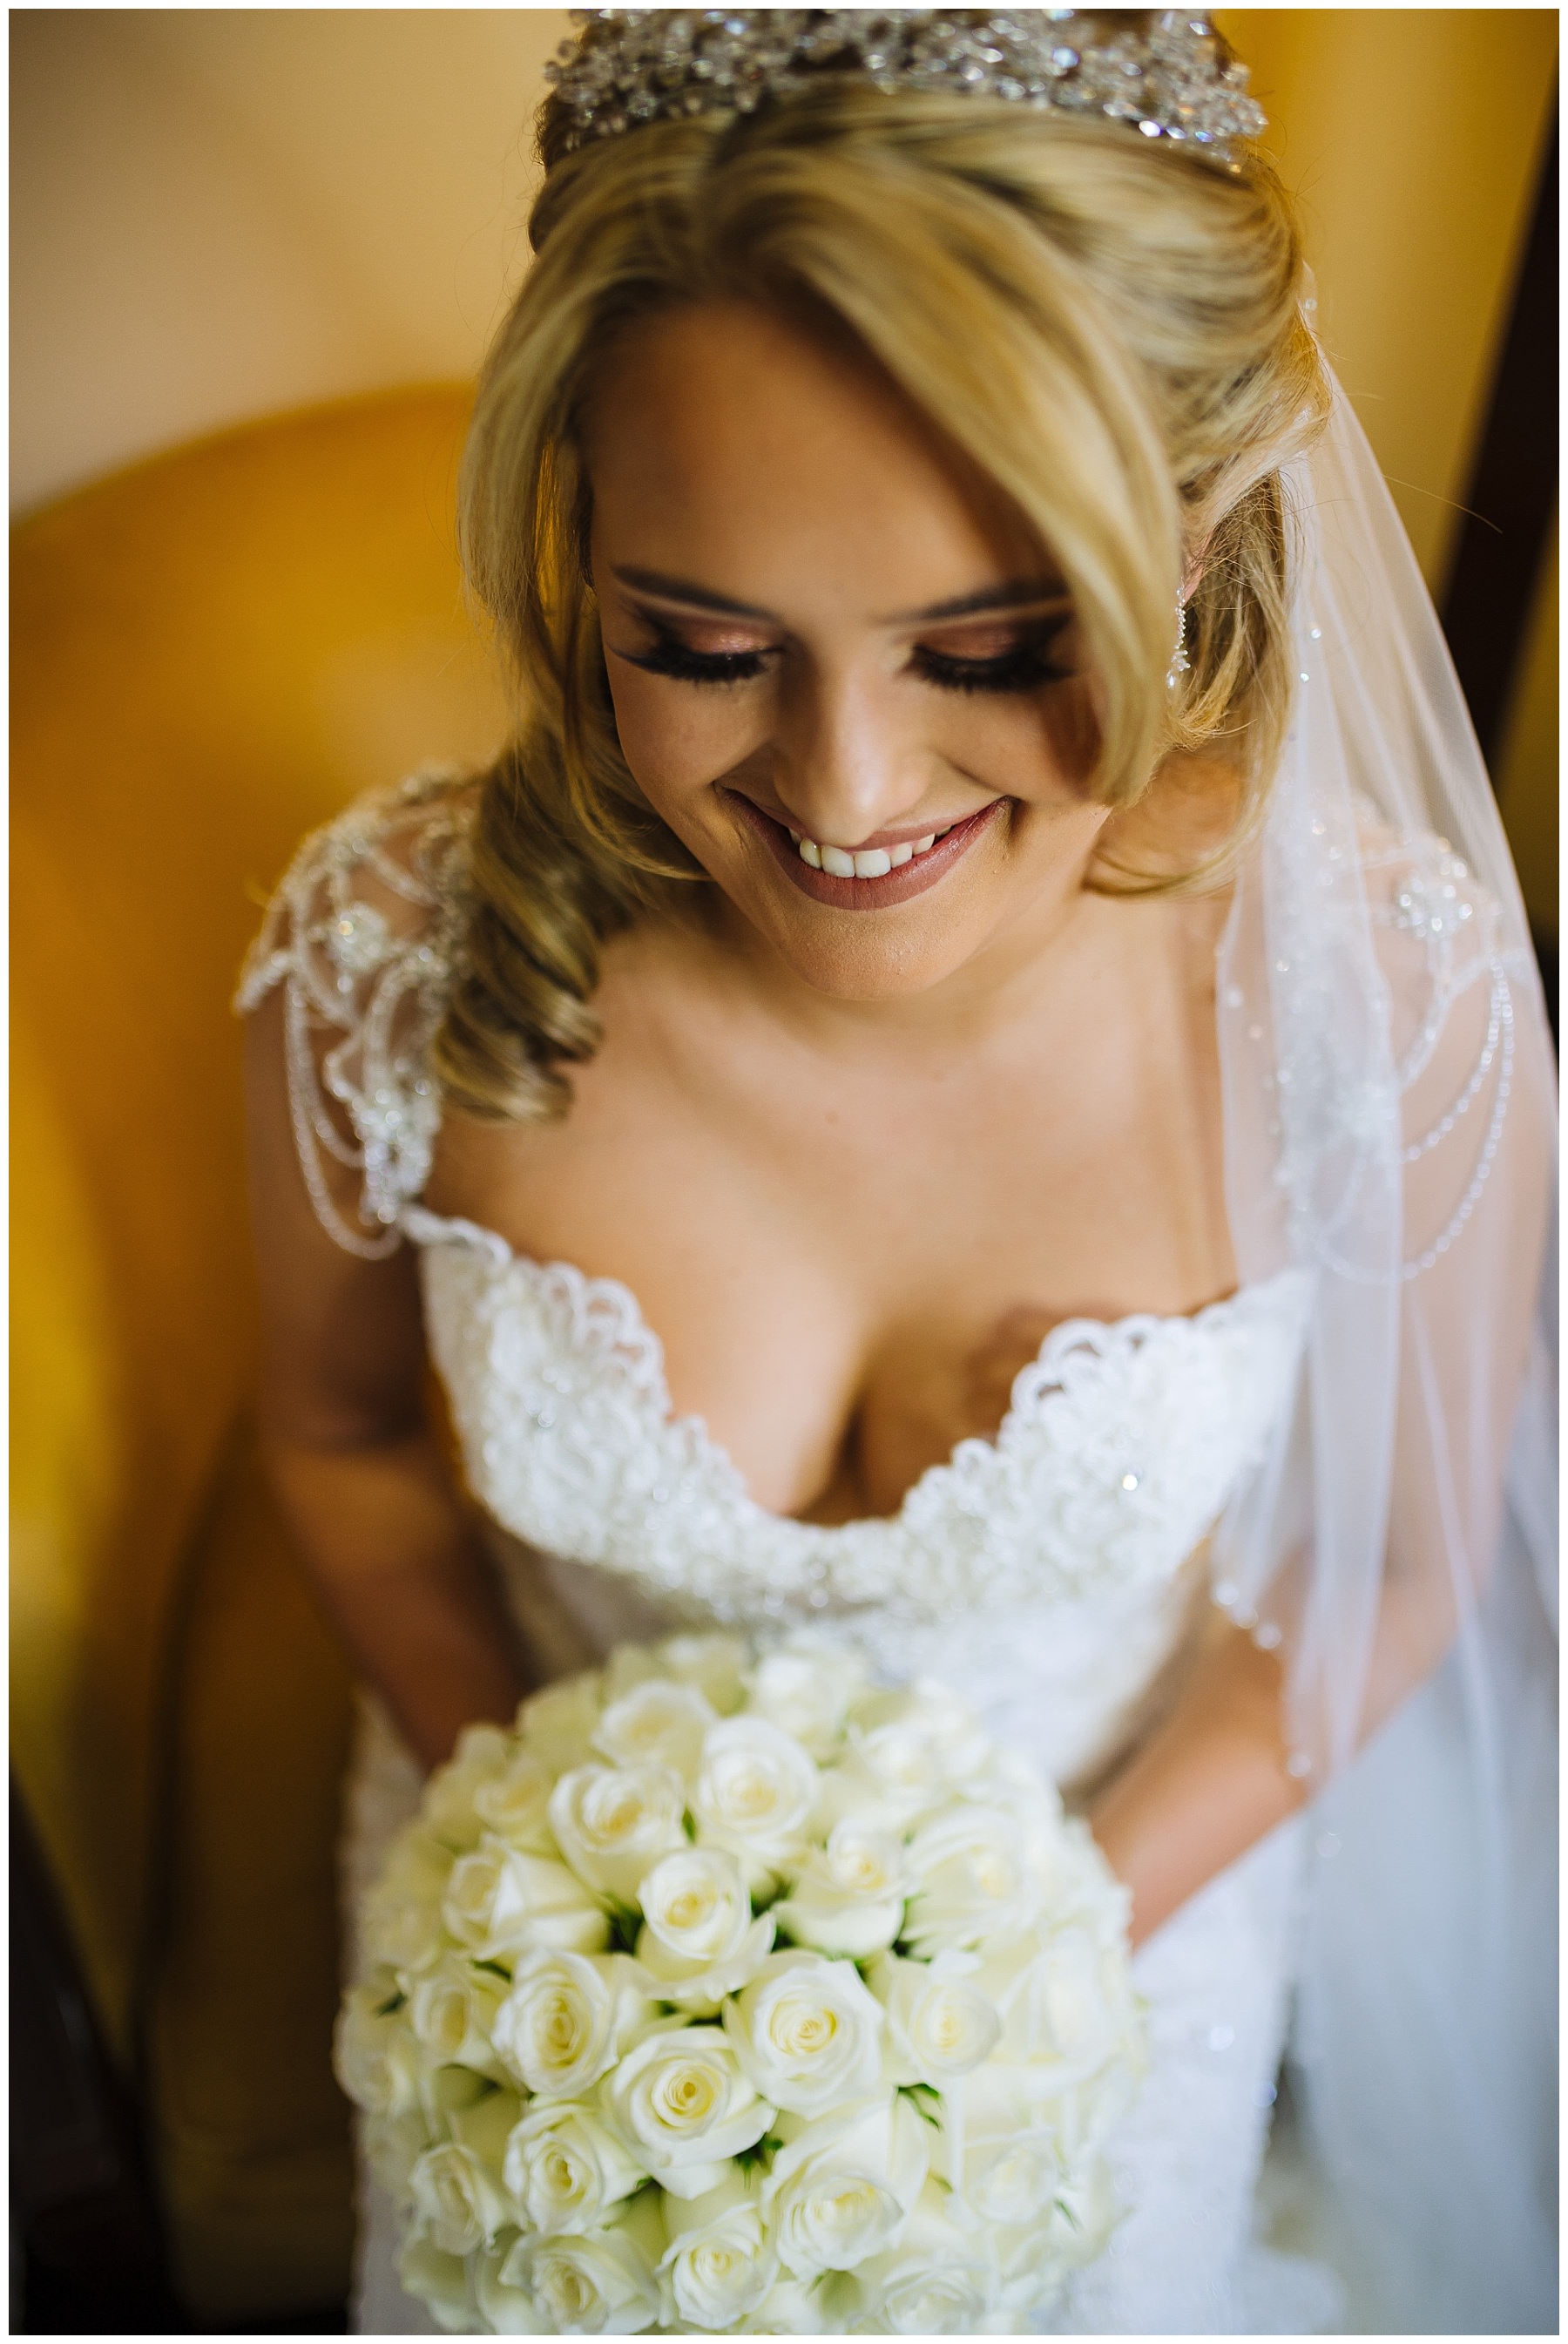 stunning bride smiles for portrait before wedding